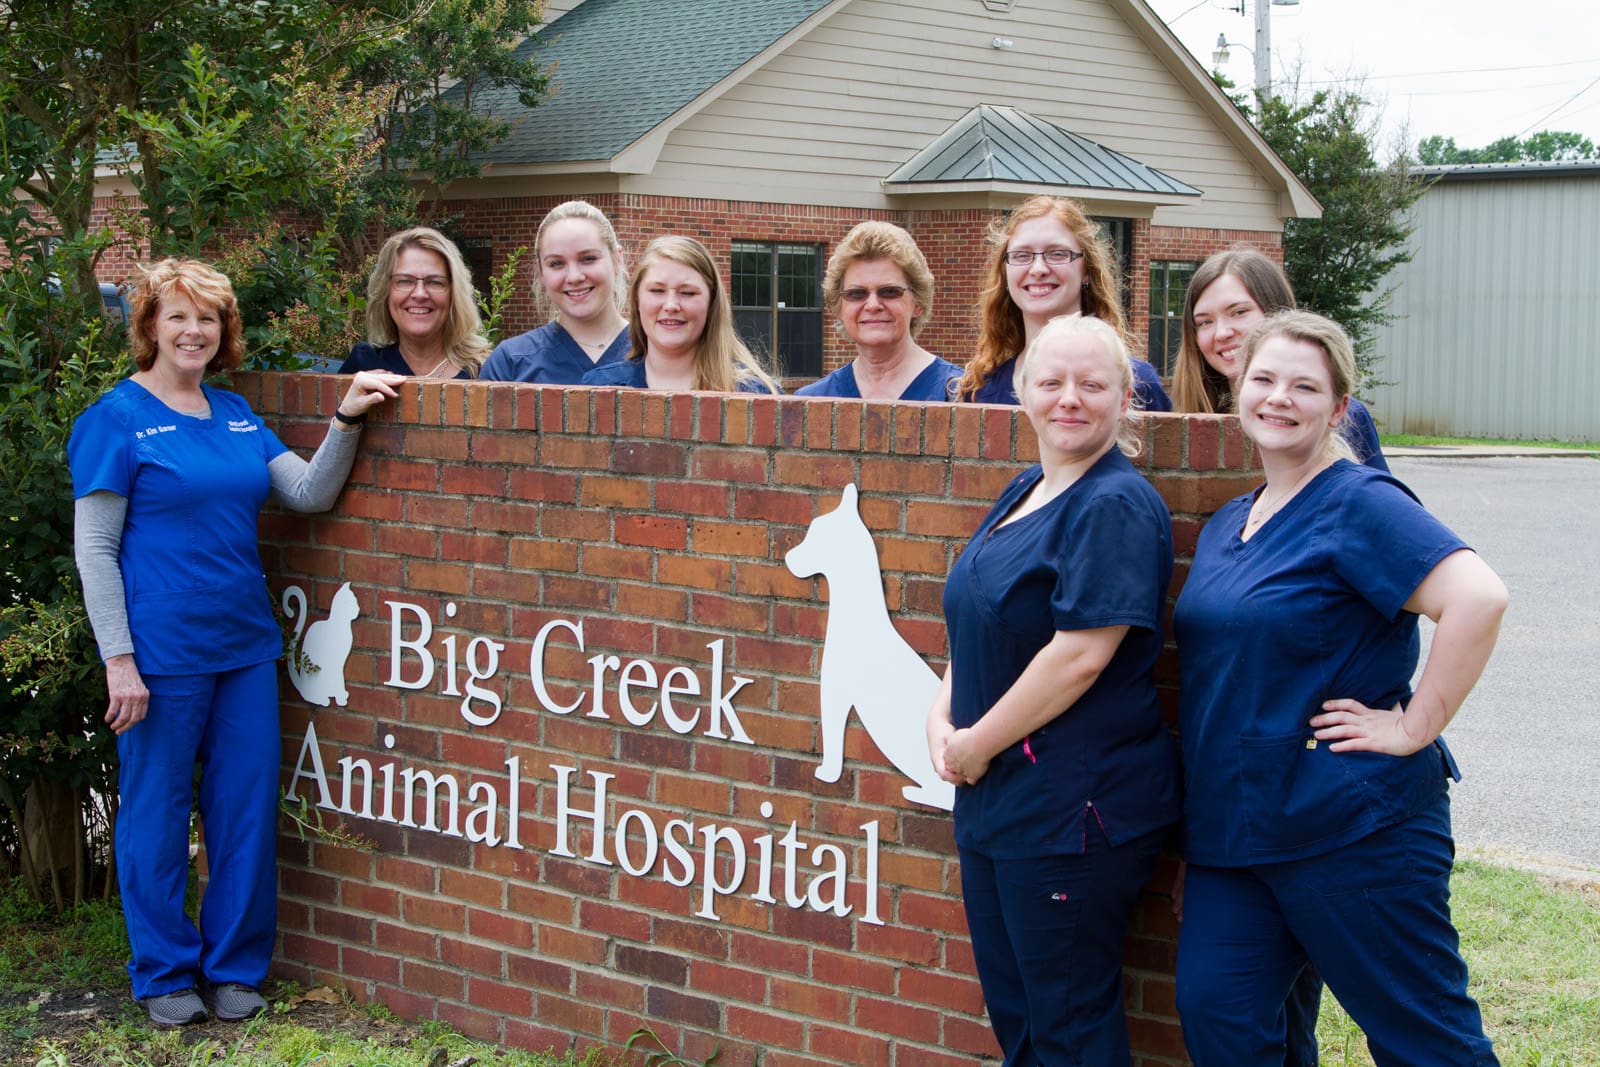 Big Creek Animal Hospital staff standing near the hospital's sign